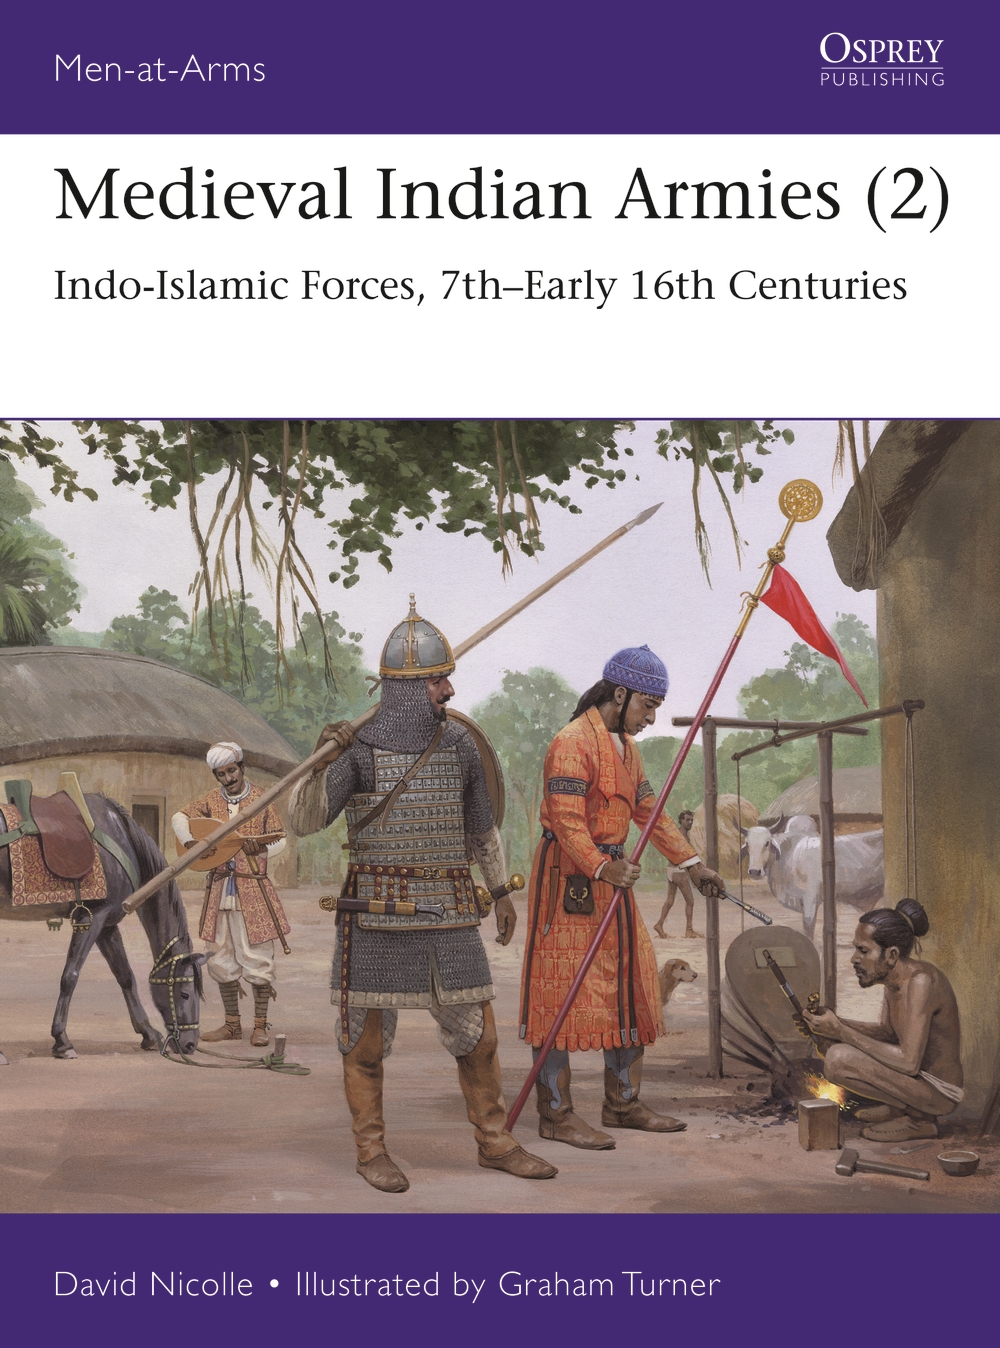 Medieval Indian Armies (2) book jacket